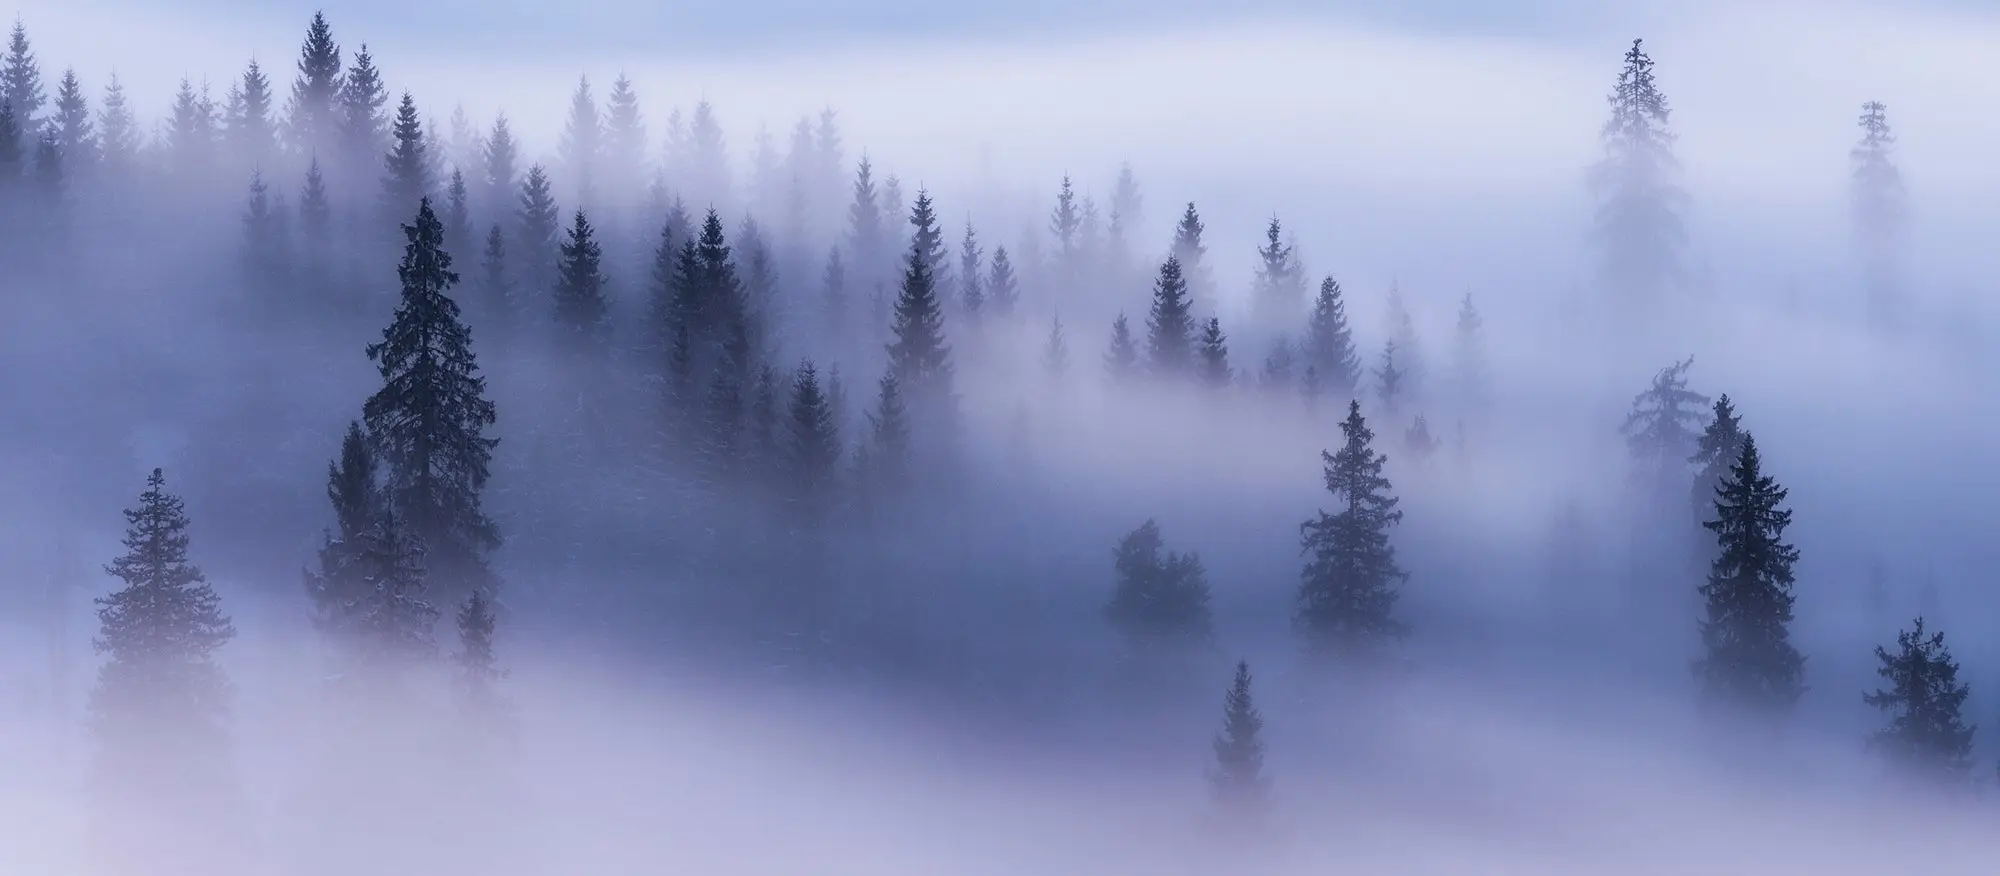 Pine trees engulfed in fog. 